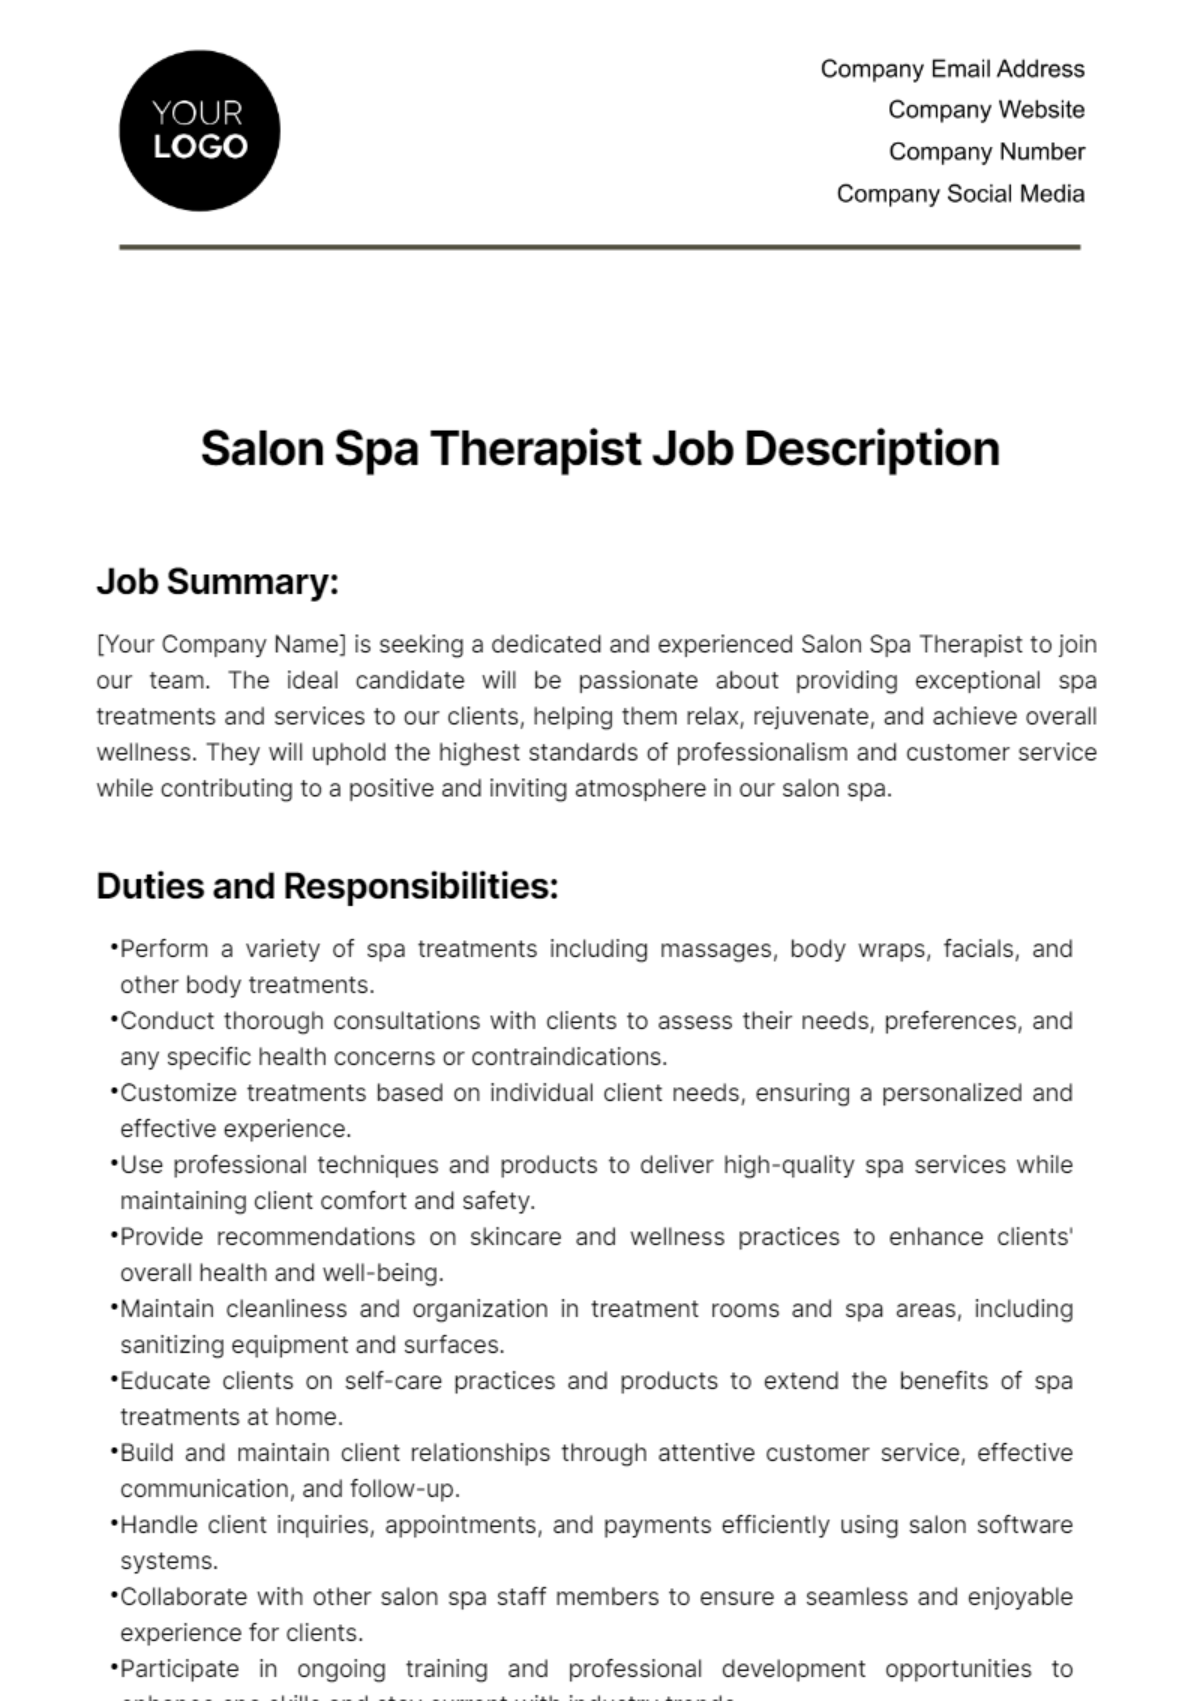 Salon Spa Therapist Job Description Template